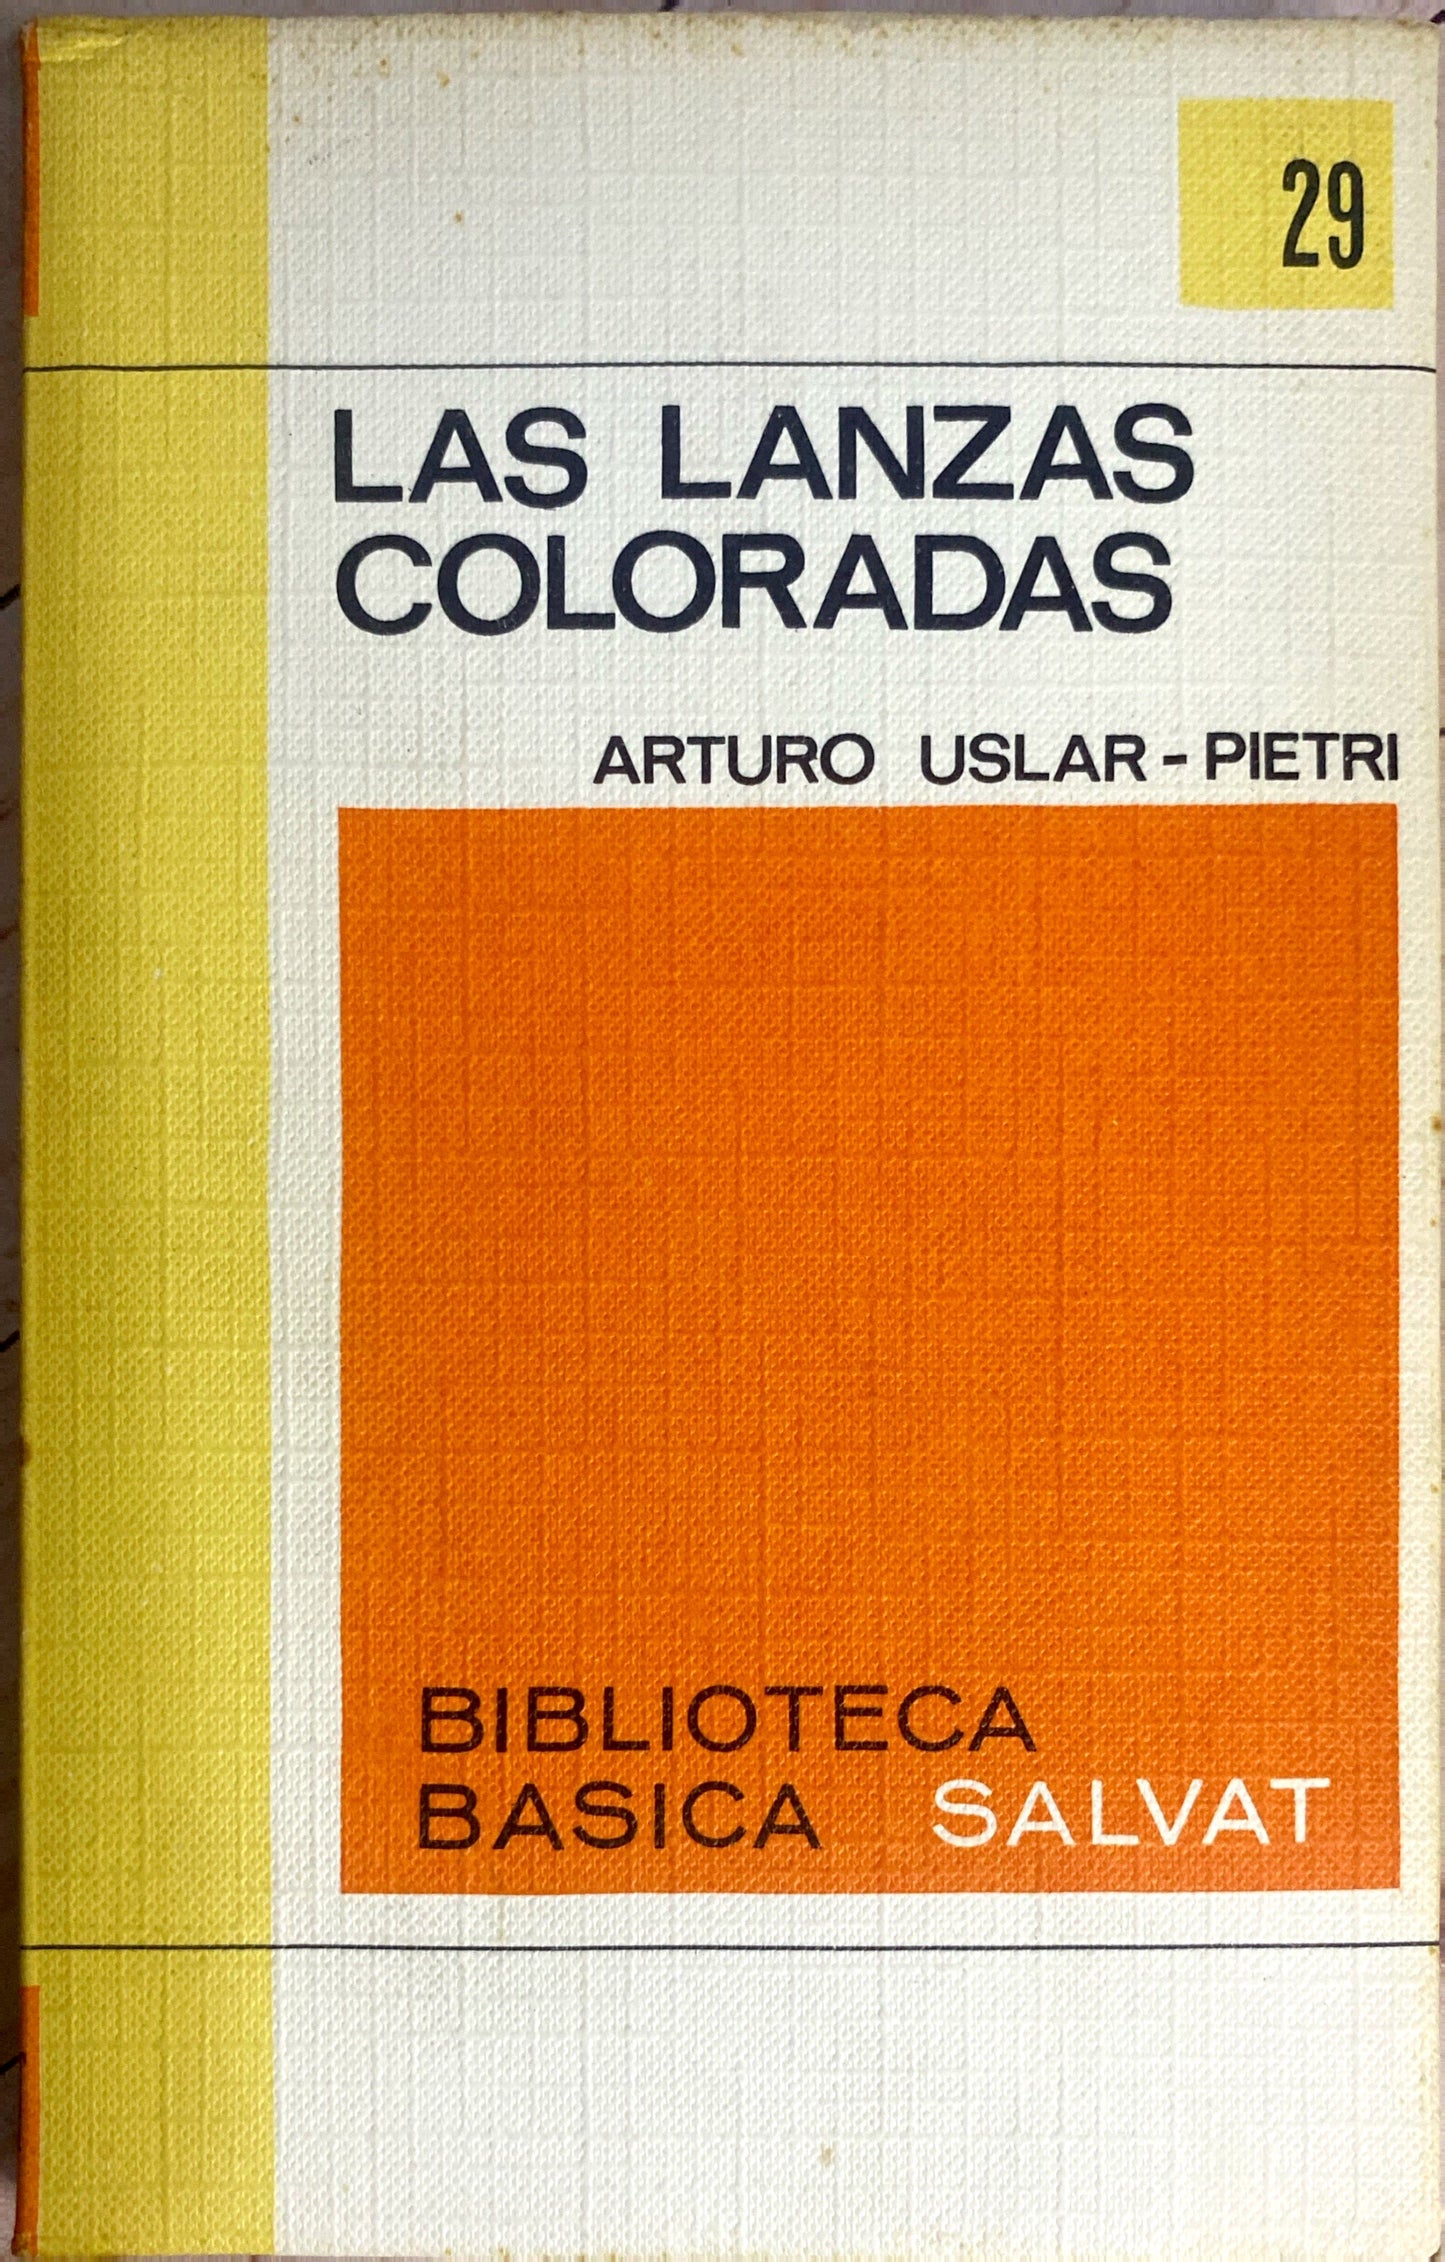 Las lanzas coloradas | Arturo Uslar Pietri